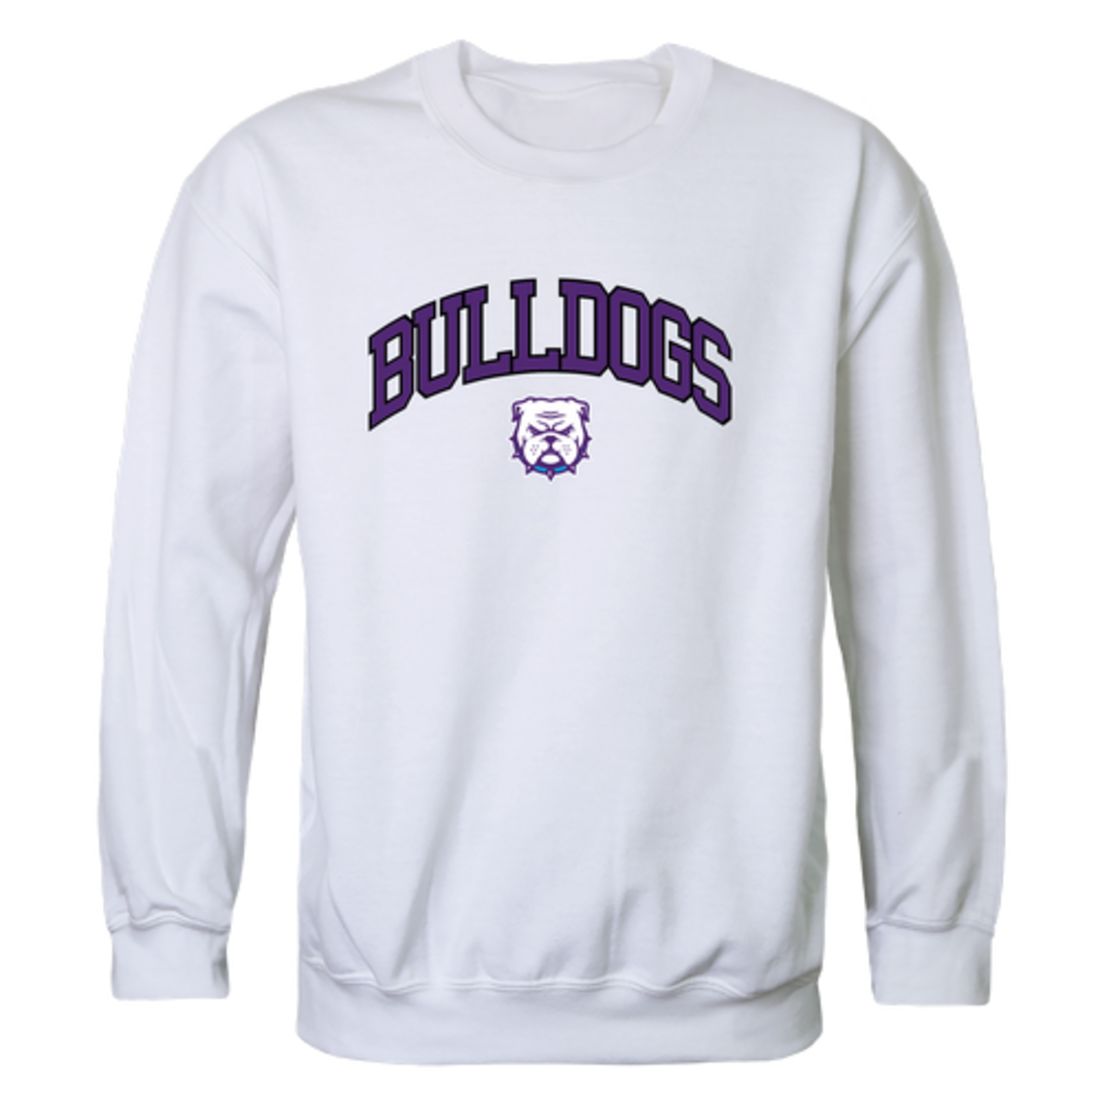 Truman-State-University-Bulldogs-Campus-Fleece-Crewneck-Pullover-Sweatshirt